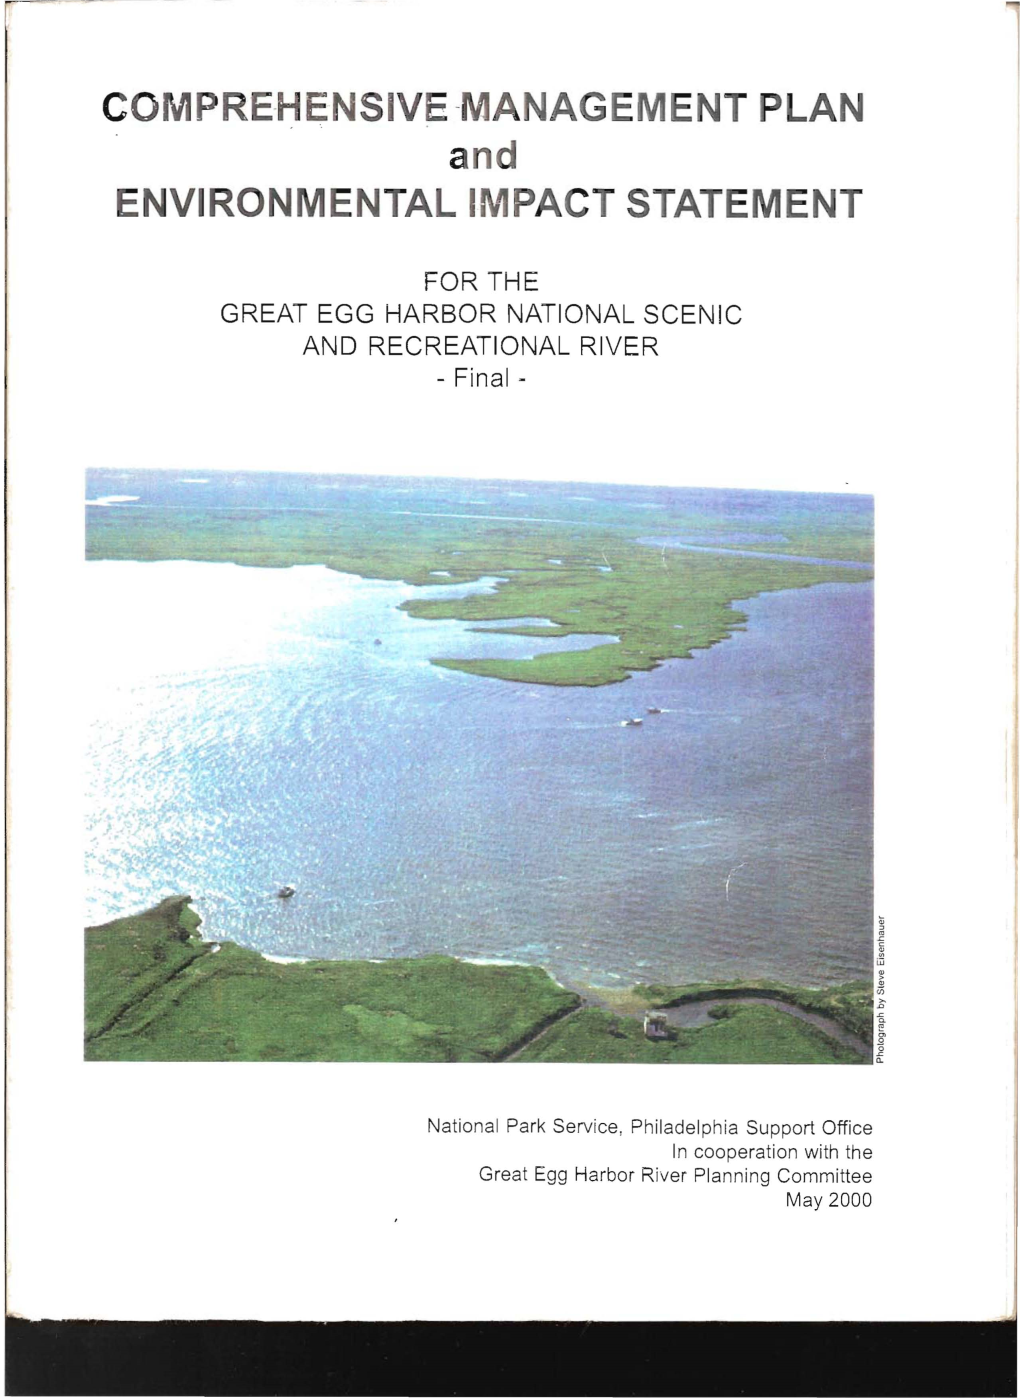 Great Egg Harbor River Management Plan & Environmental Impact